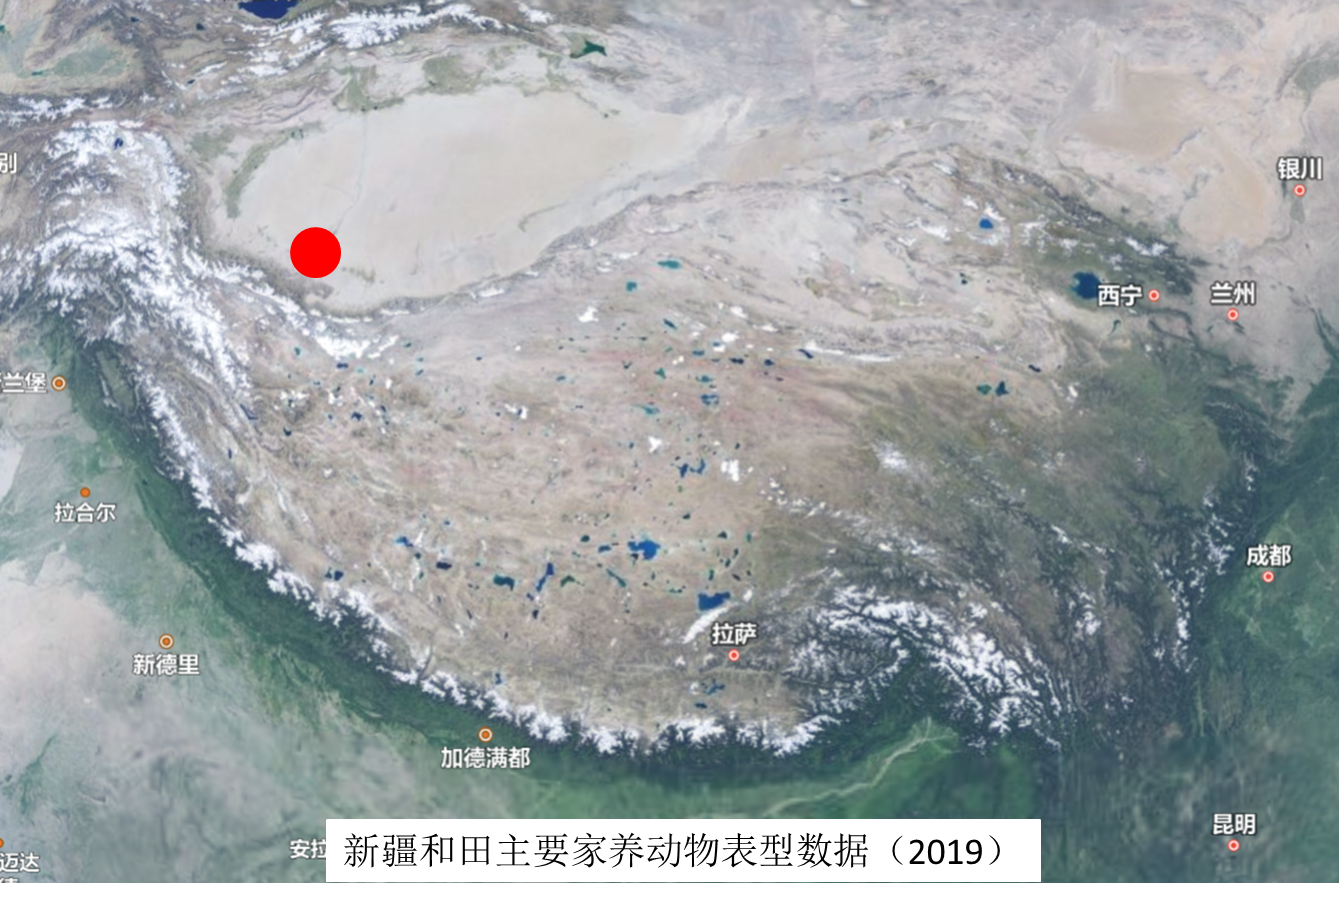 Phenotypic data of main domestic animals in Xinjiang and surrounding areas - Hetian, Xinjiang (2019)